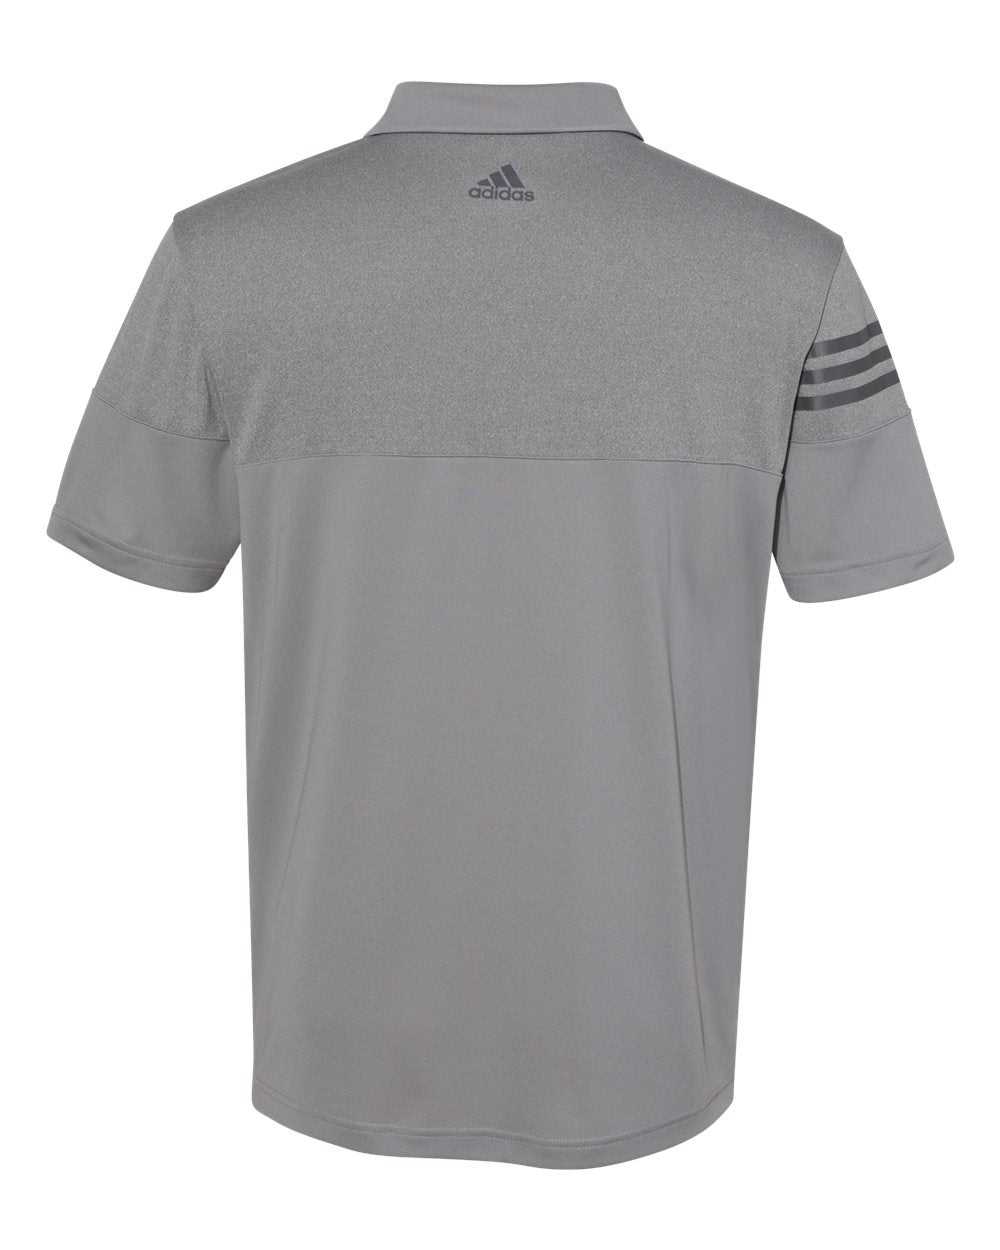 Adidas A213 Heathered 3-Stripes Block Sport Shirt - Grey Three - HIT a Double